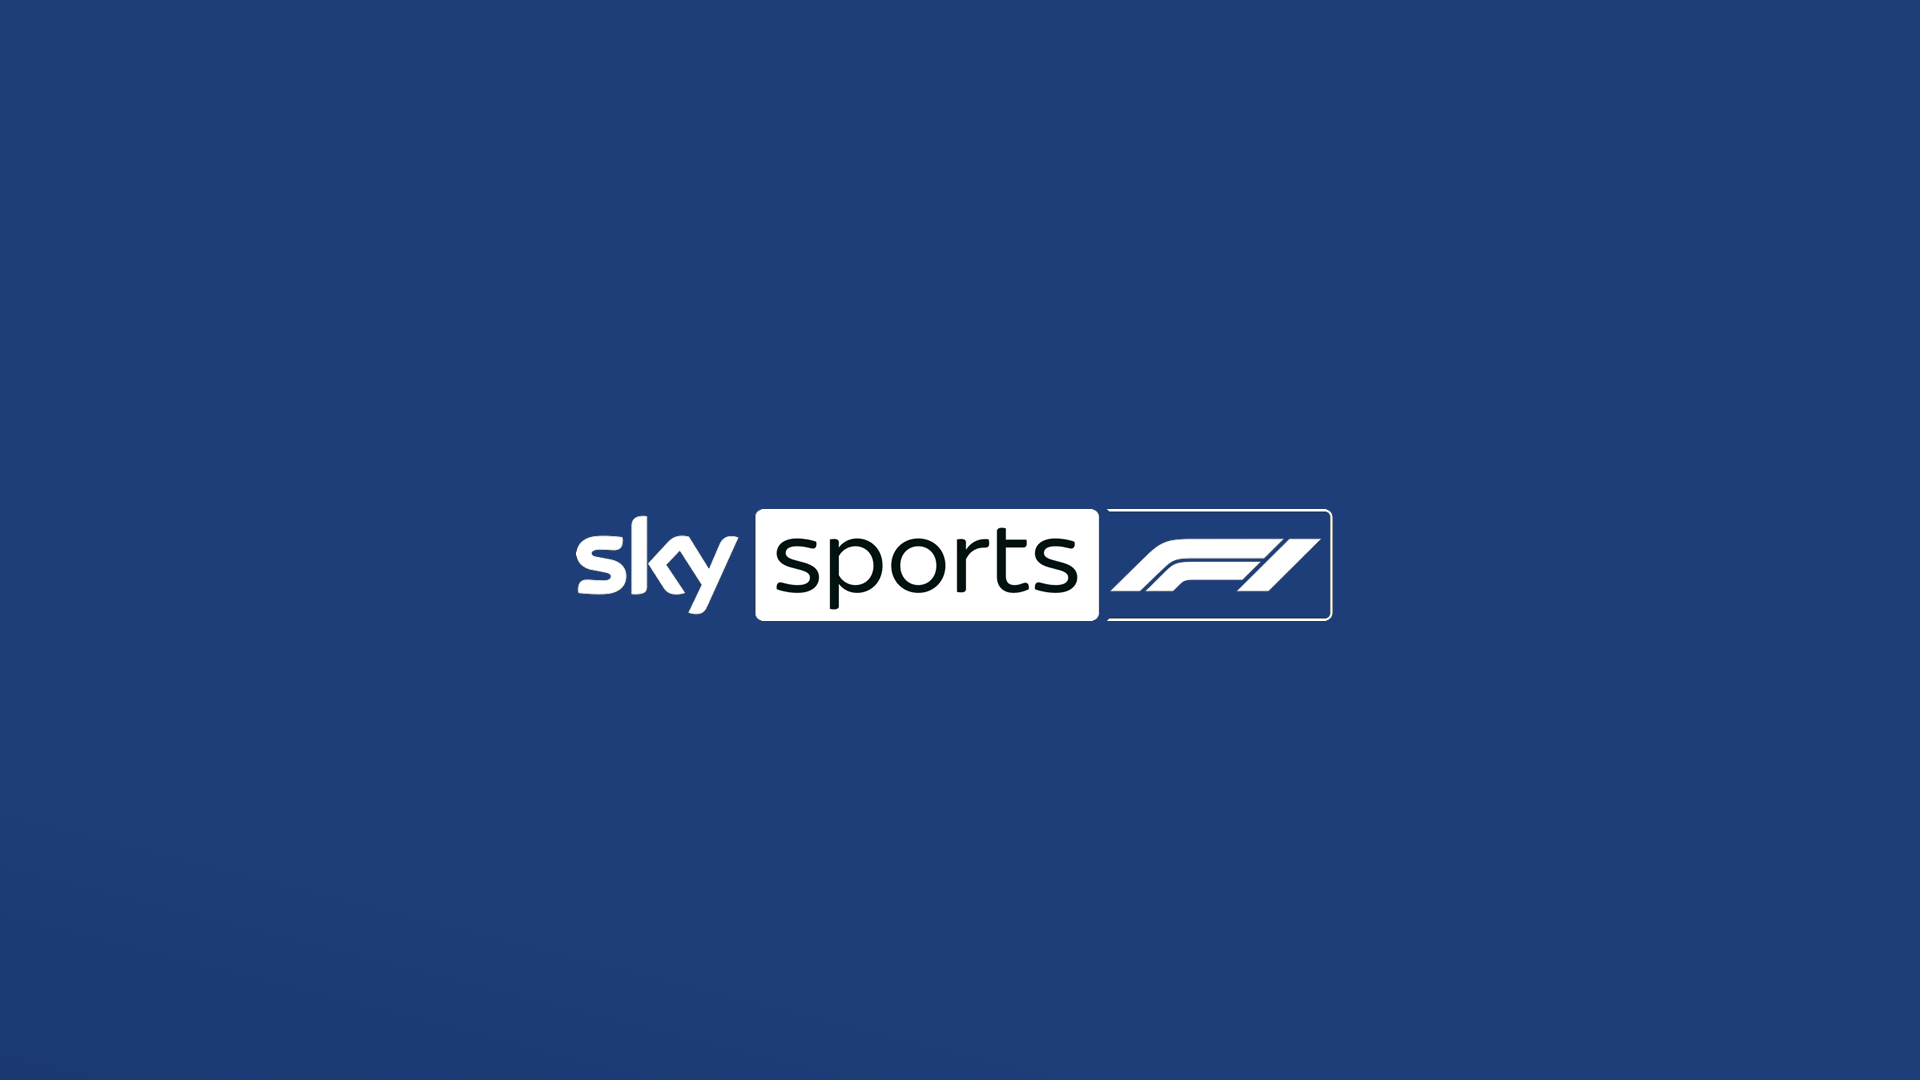 Sky Sports Formula 1 Live Online